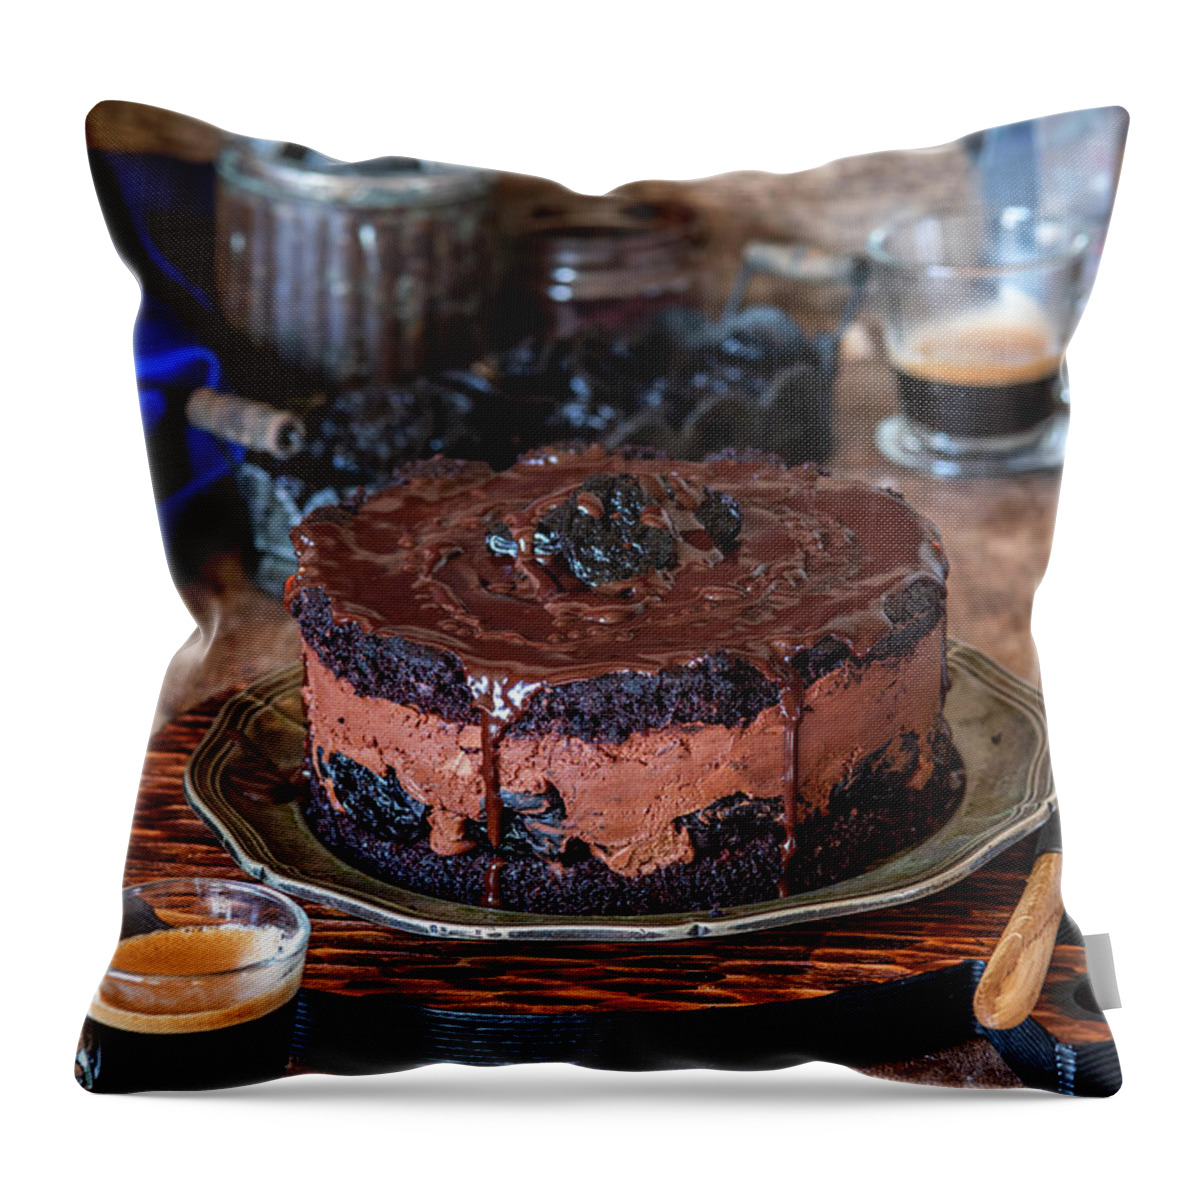 Ip_13179751 Throw Pillow featuring the photograph Prune Chocolate Cake by Irina Meliukh